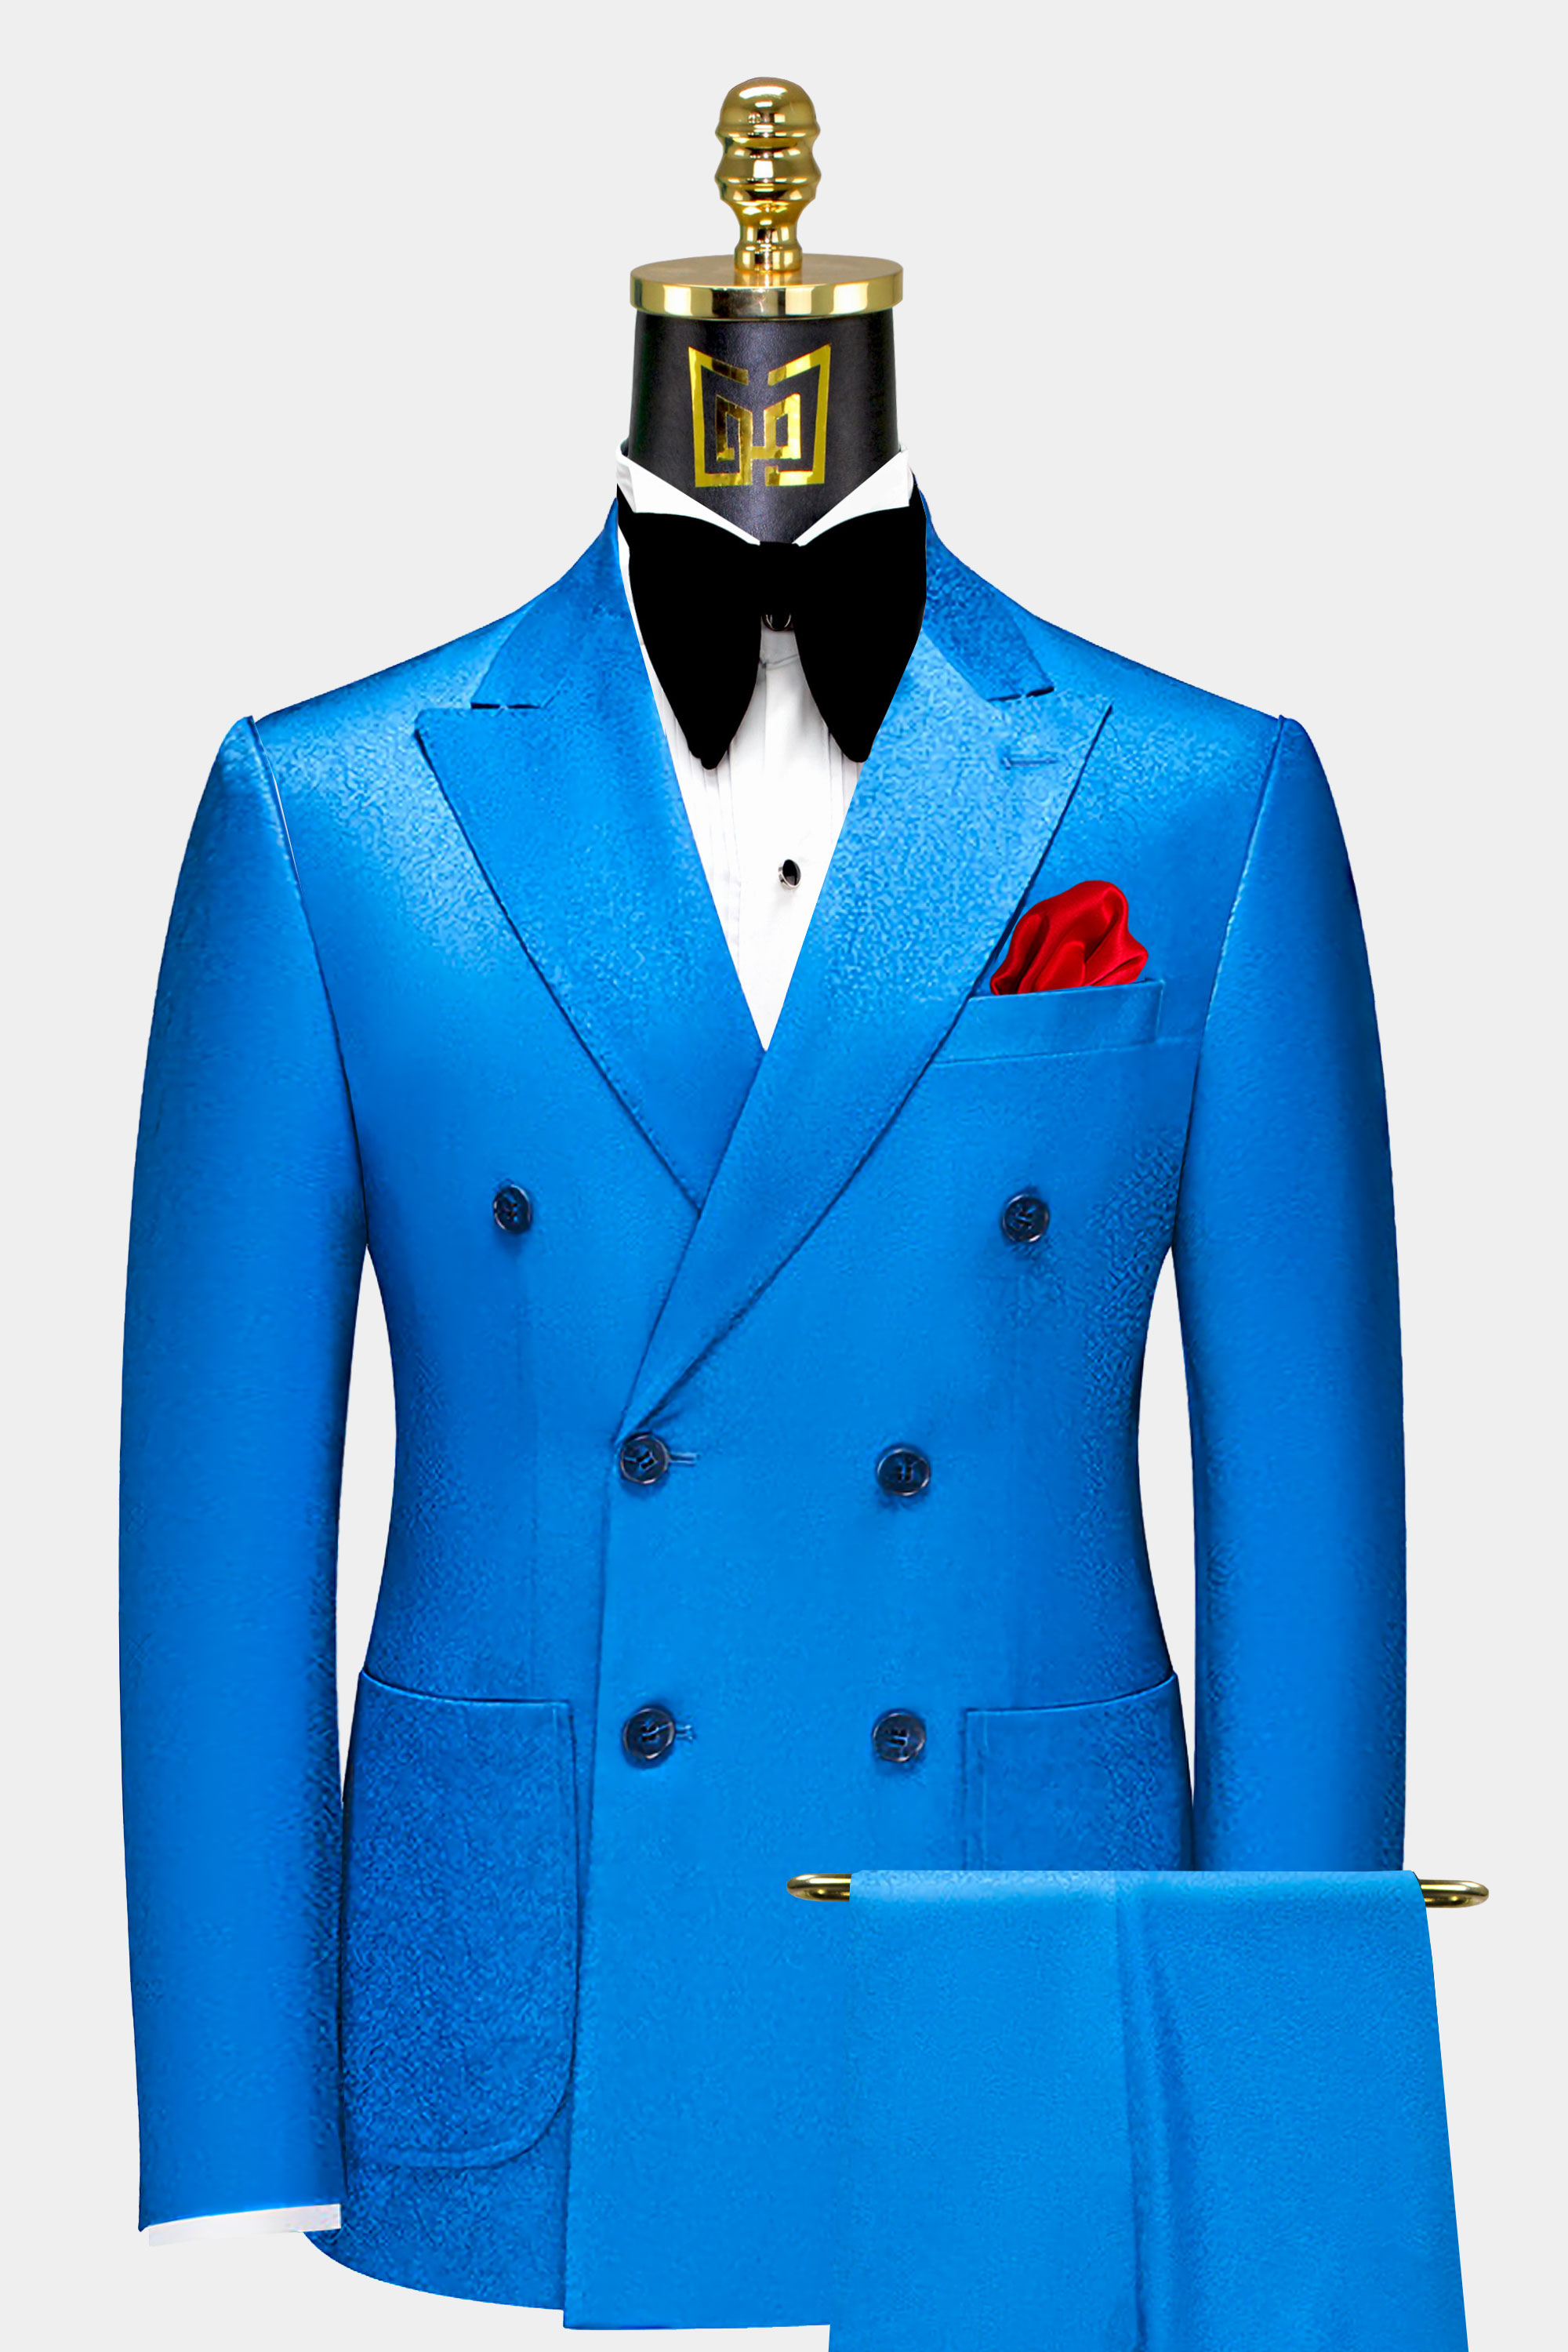 Mens-Double-Breasted-Blue-Suit-Groom-Wedidng-Prom-Tuxedo-from-Gentlemansguru.com